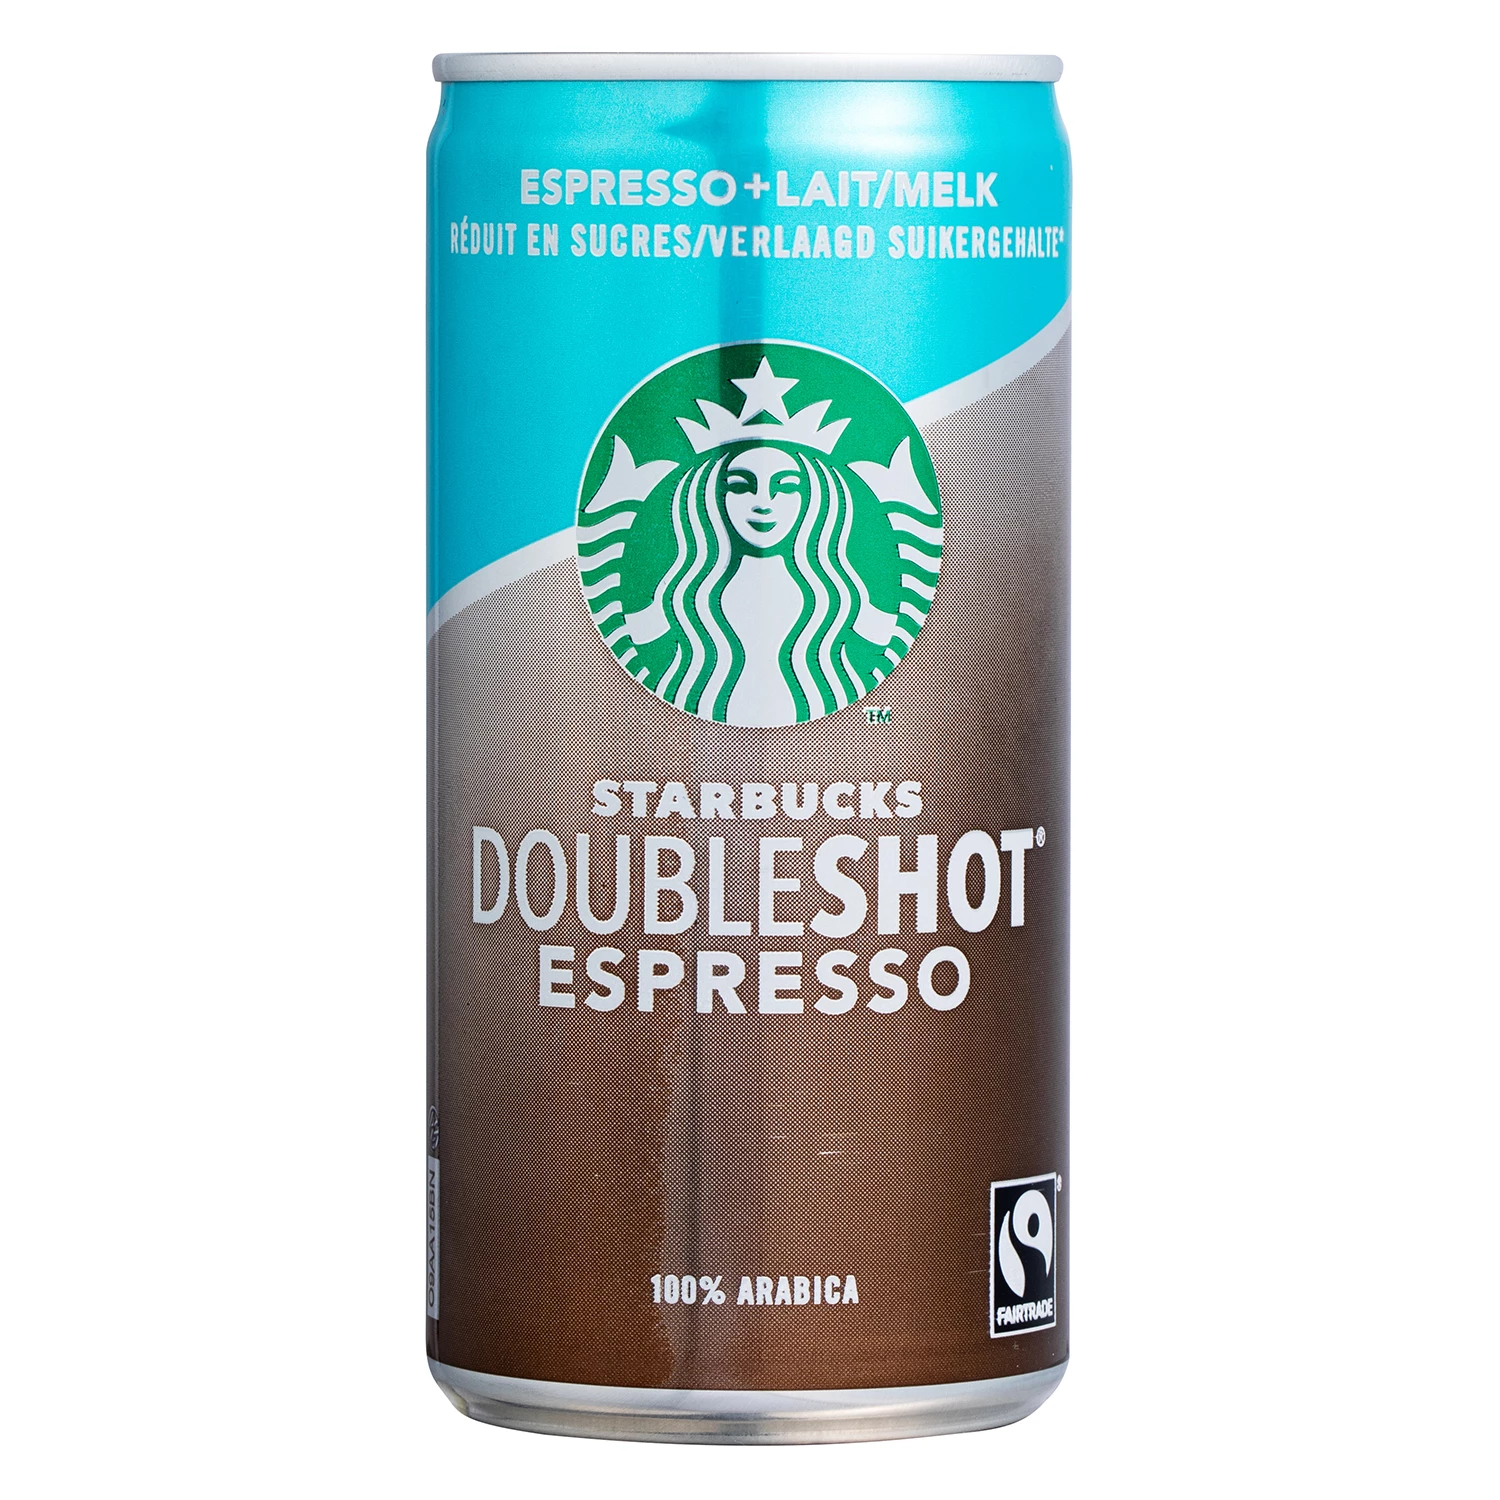 Doubleshot Espresso ridotto in zuccheri 200ml - STARBUCKS